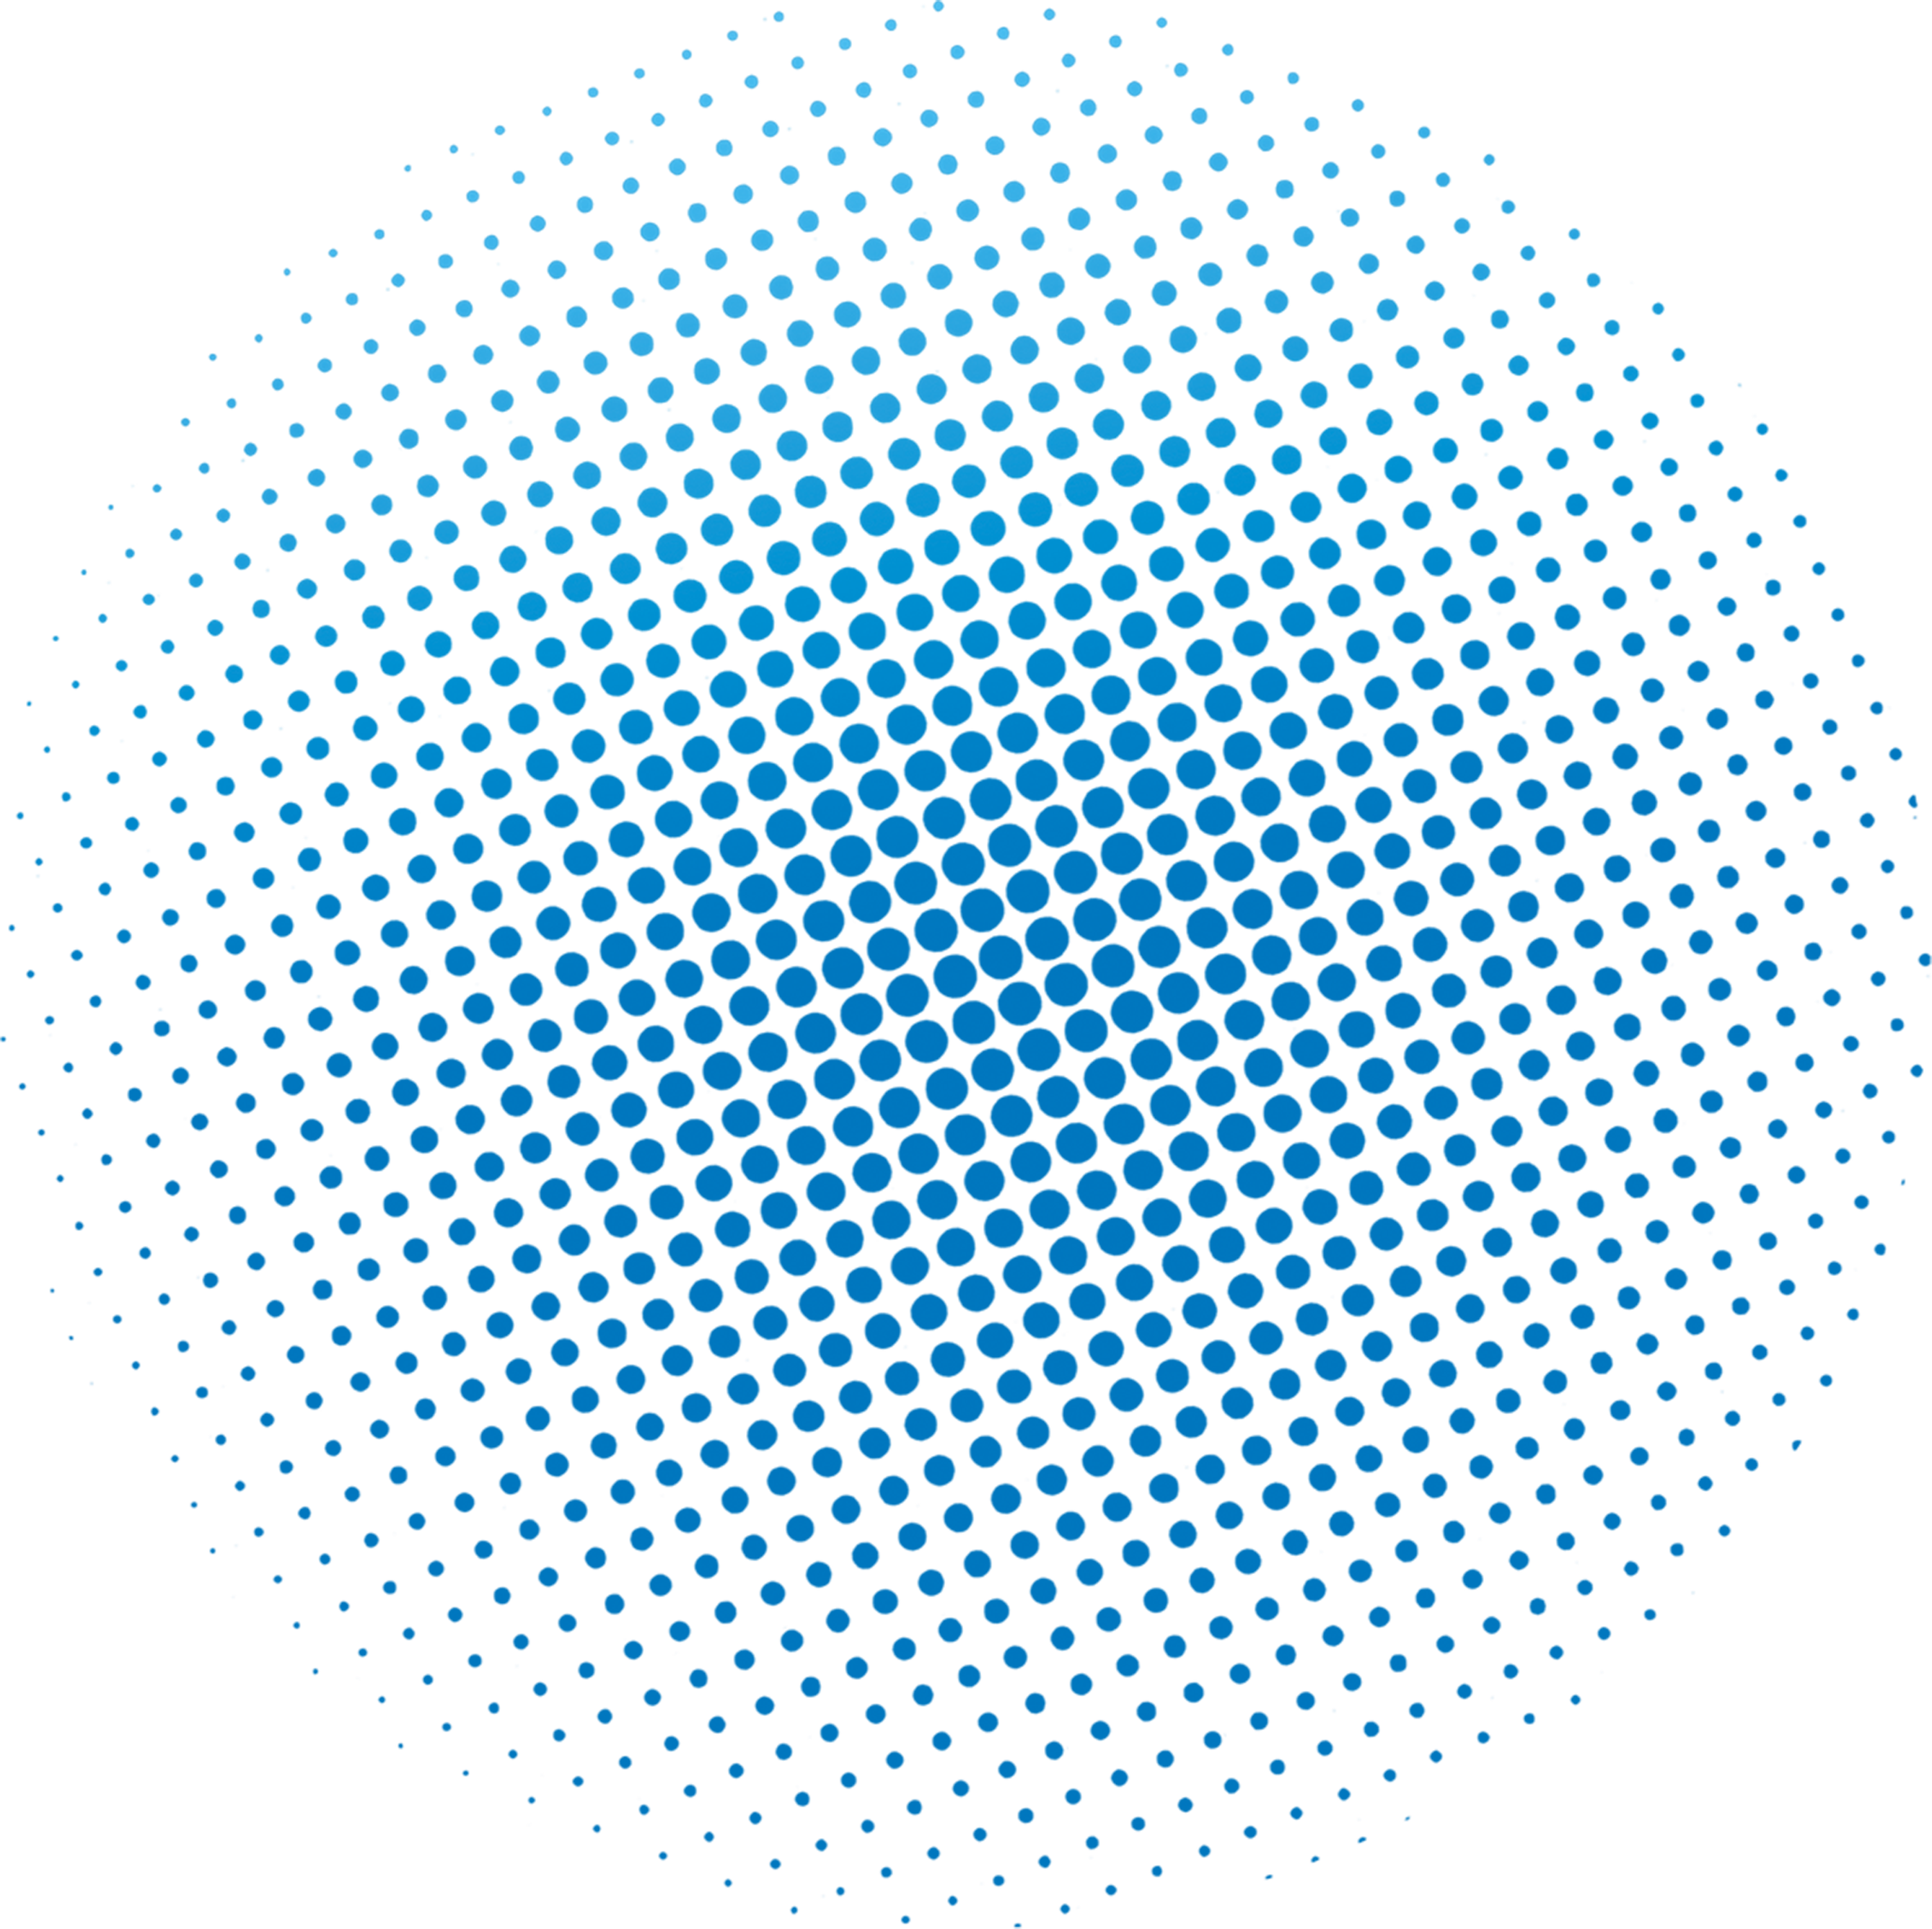 Vector Dots Pop Art Pop Art Pattern Png Free Transparent Png